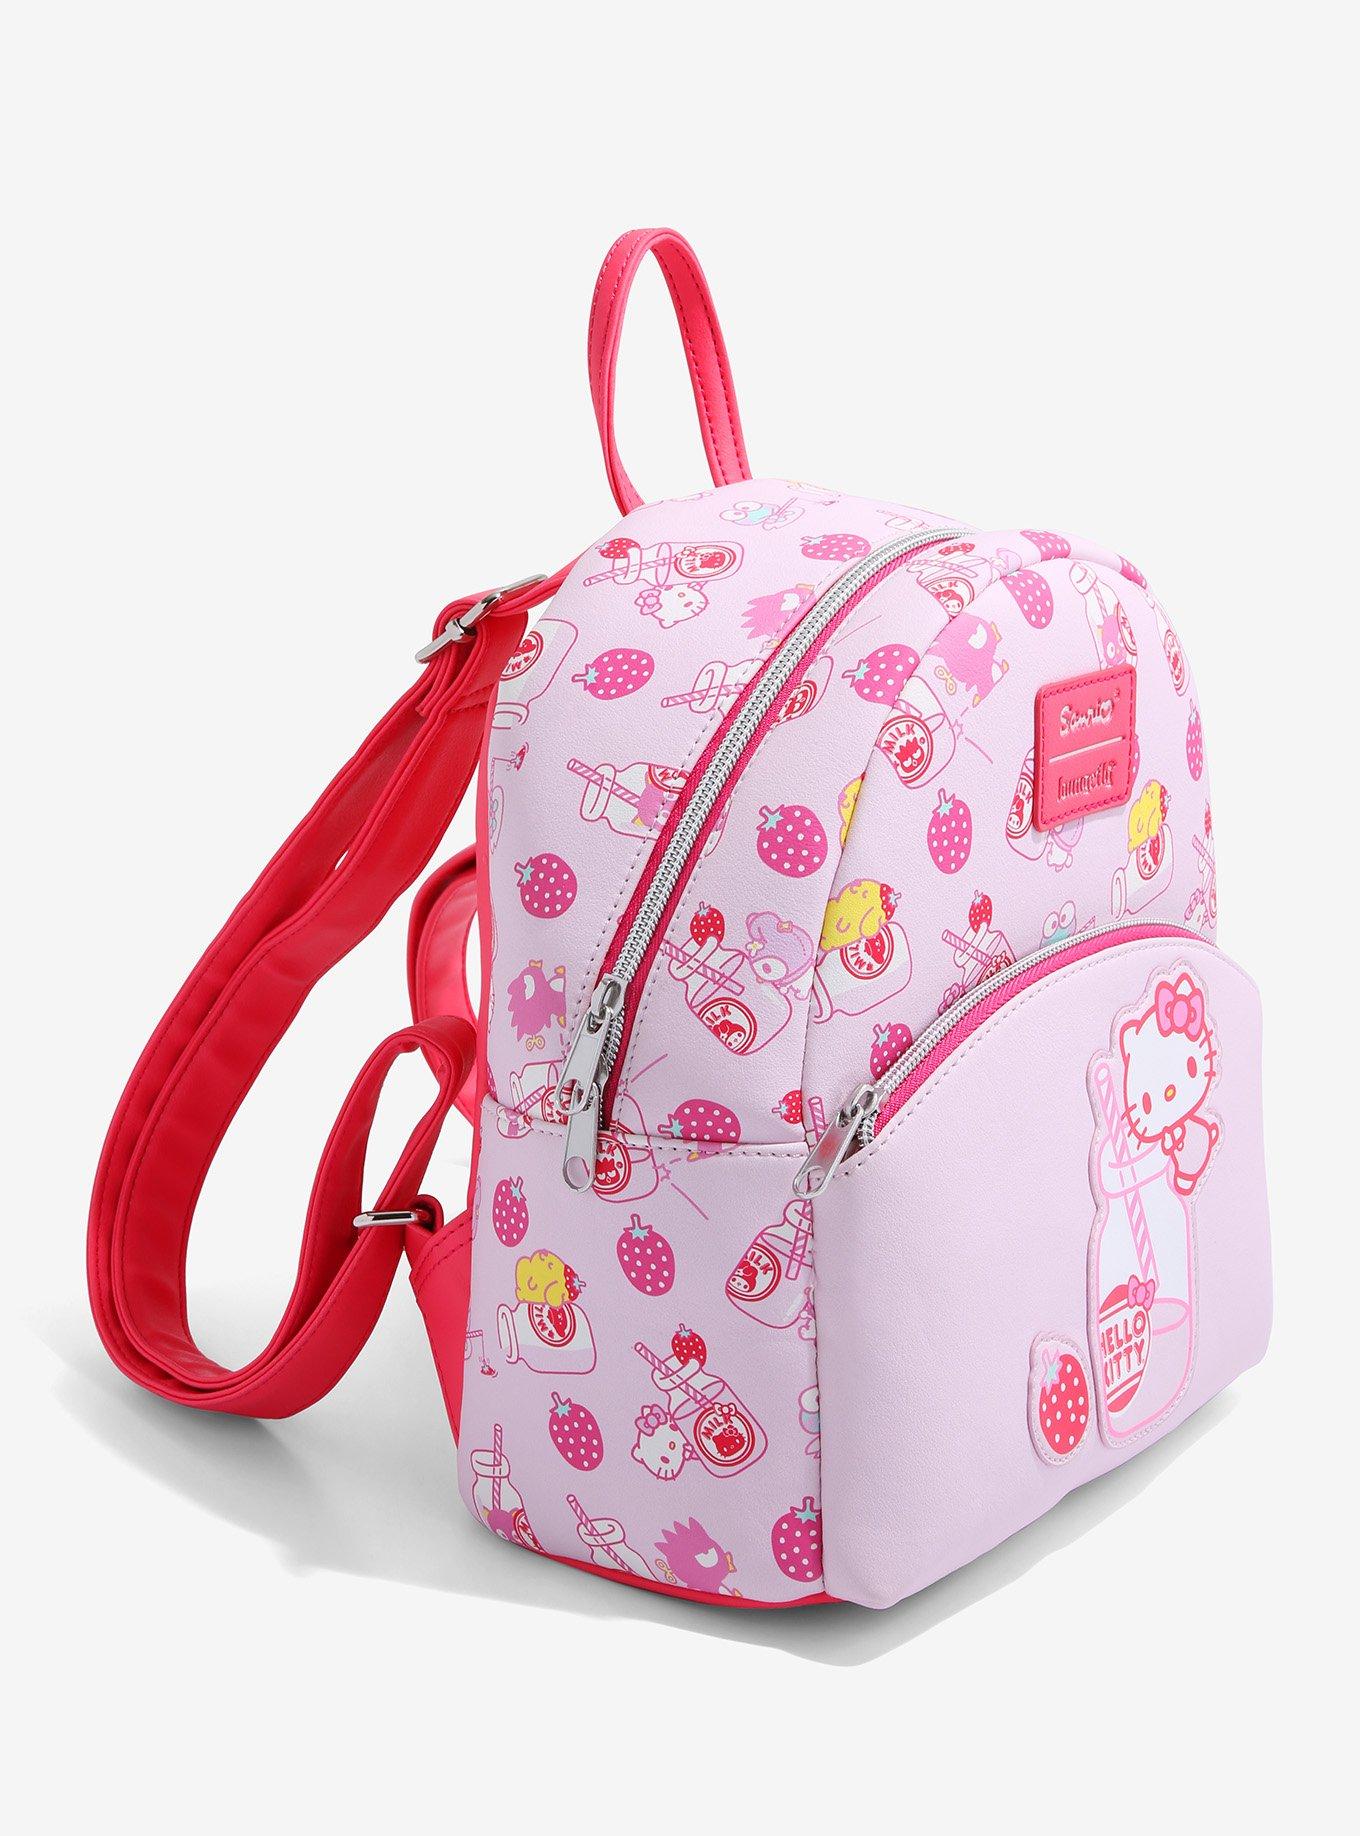 Loungefly Hello Kitty Strawberry Milk Mini Backpack